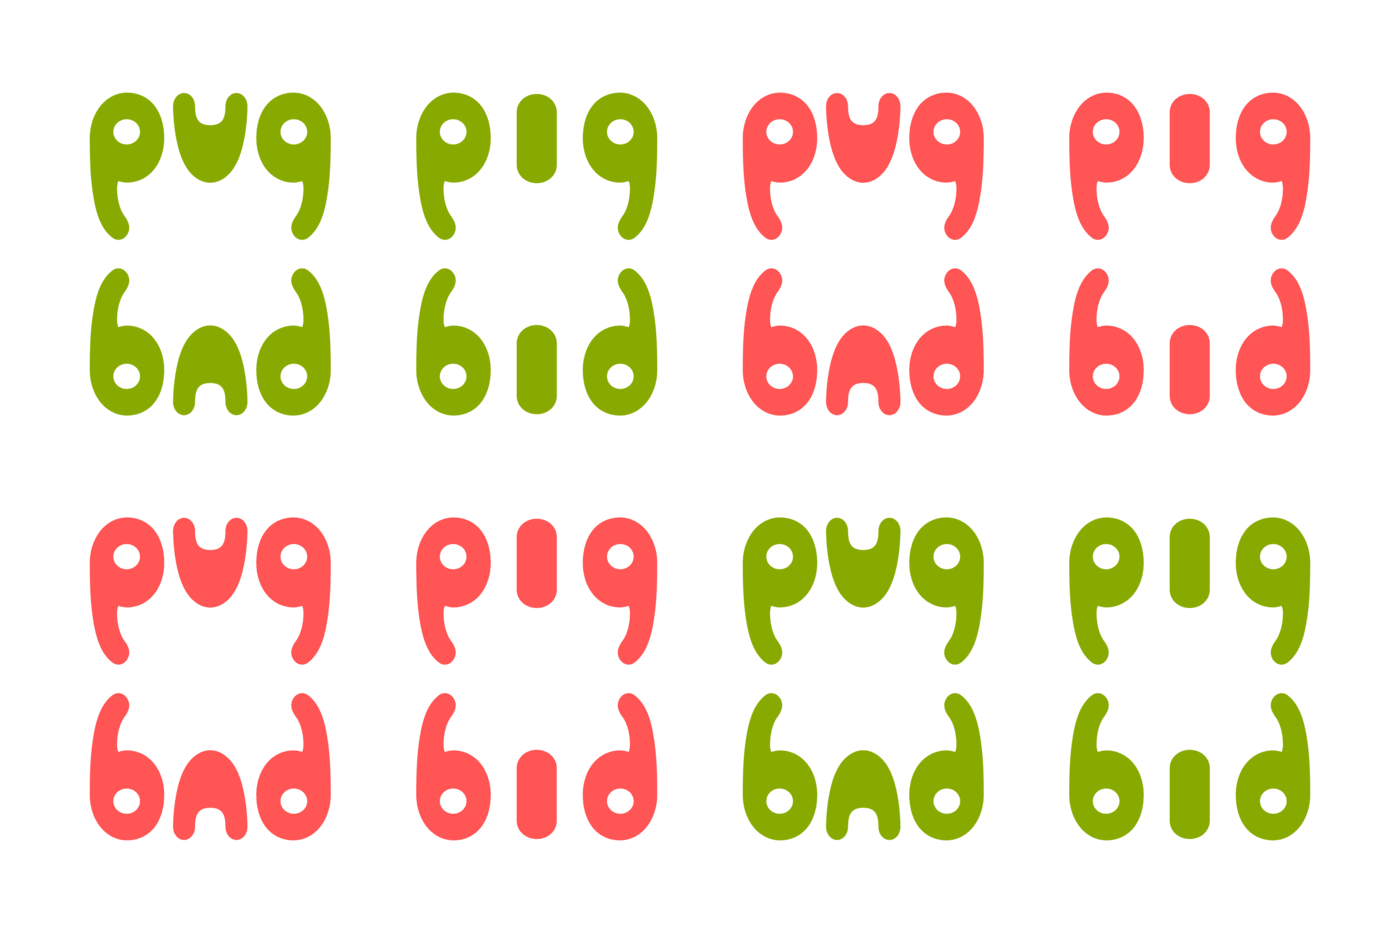 ambigram Pug Pig Bad Bid green red